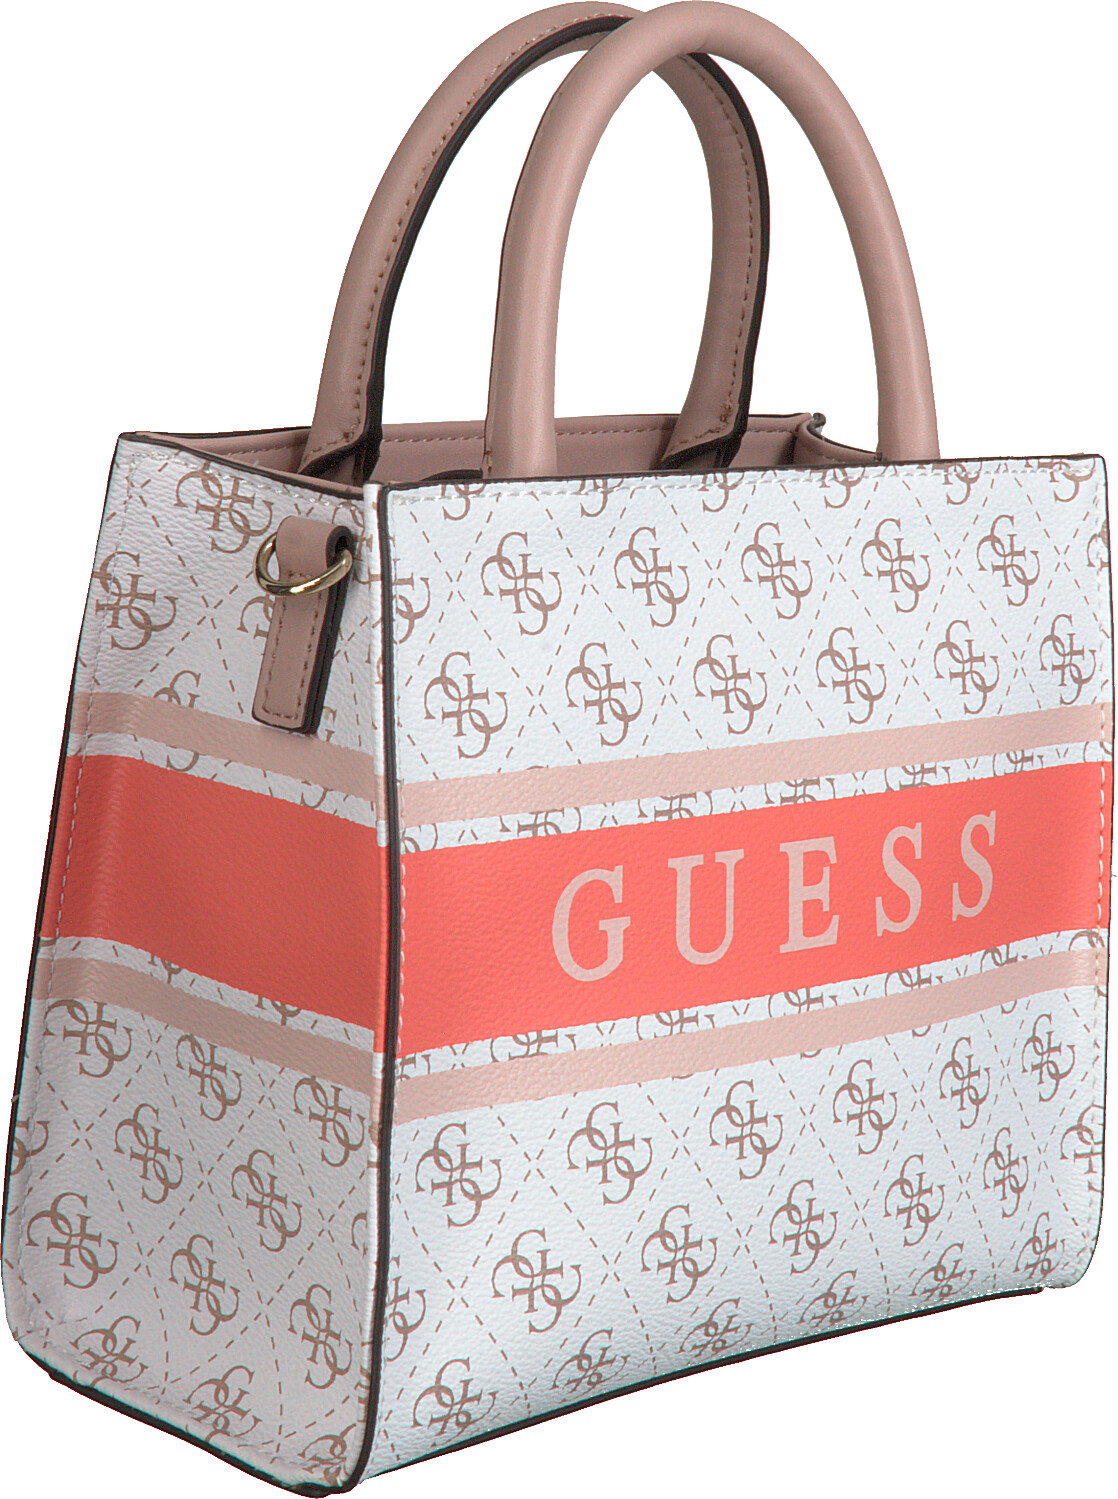 Guess Bags And Purses | semashow.com